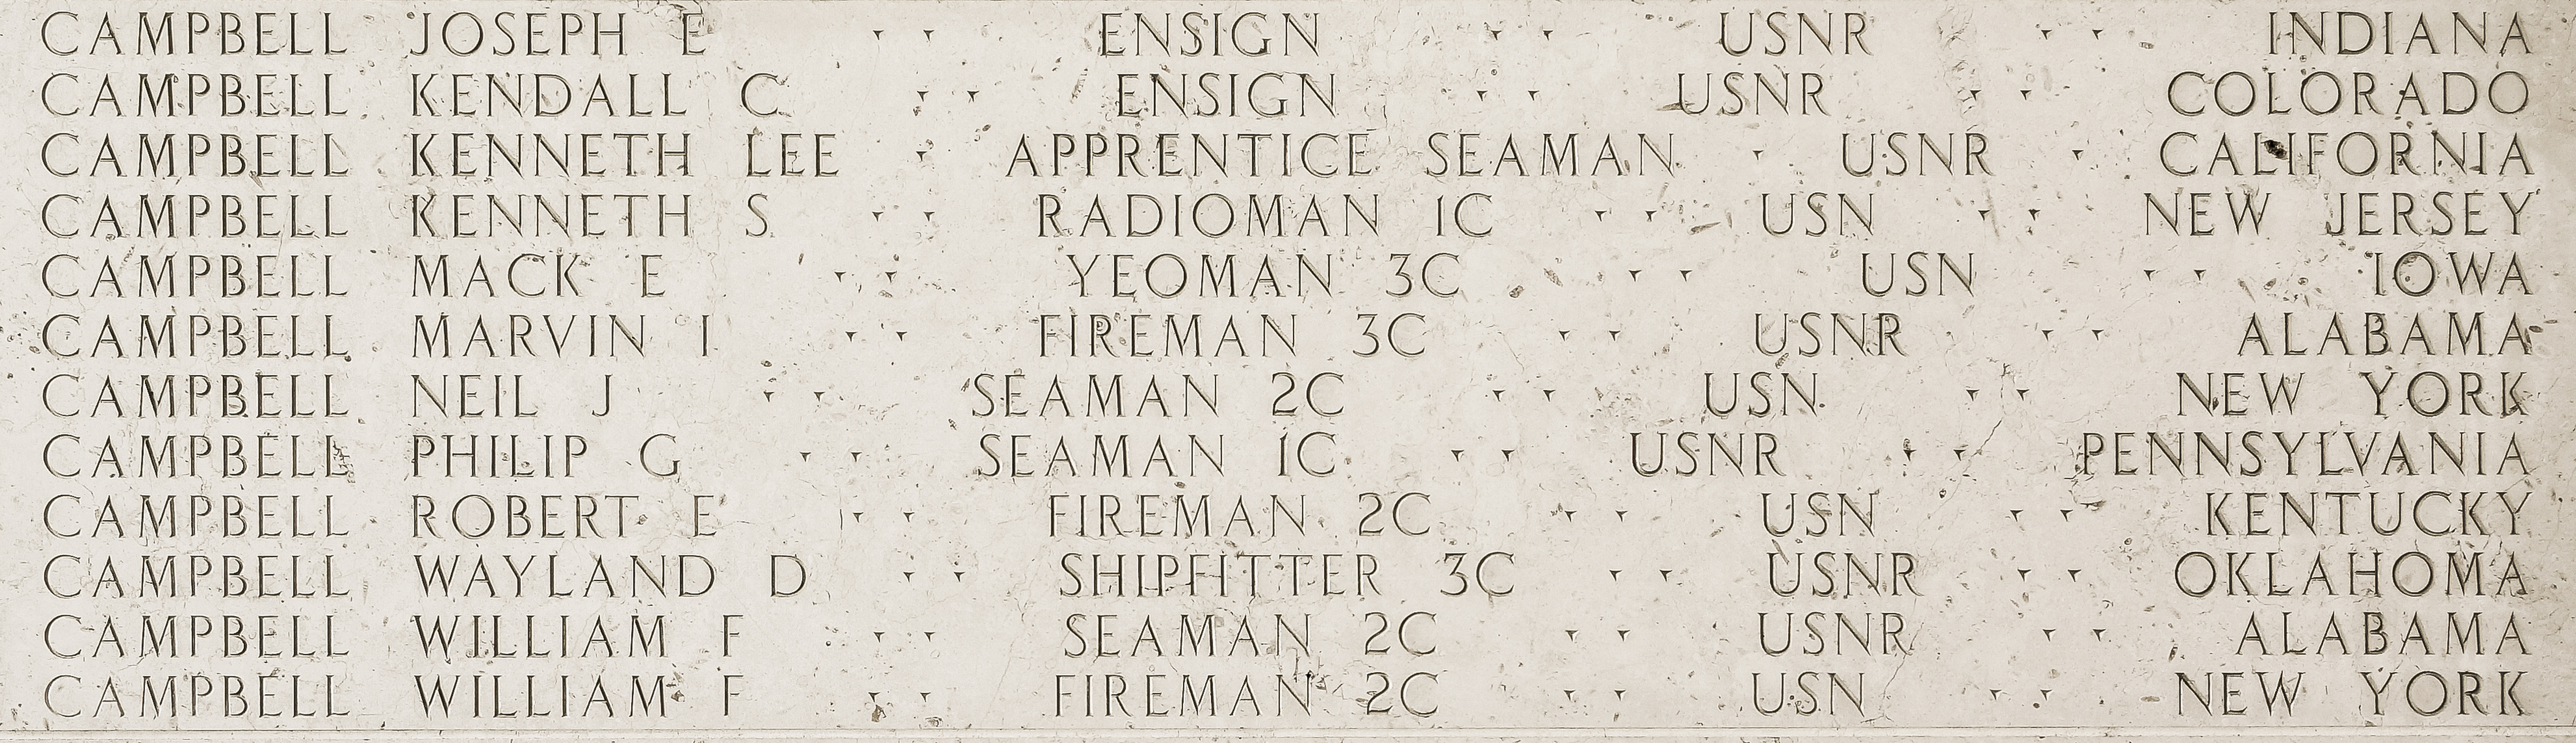 Kenneth Lee Campbell, Apprentice Seaman